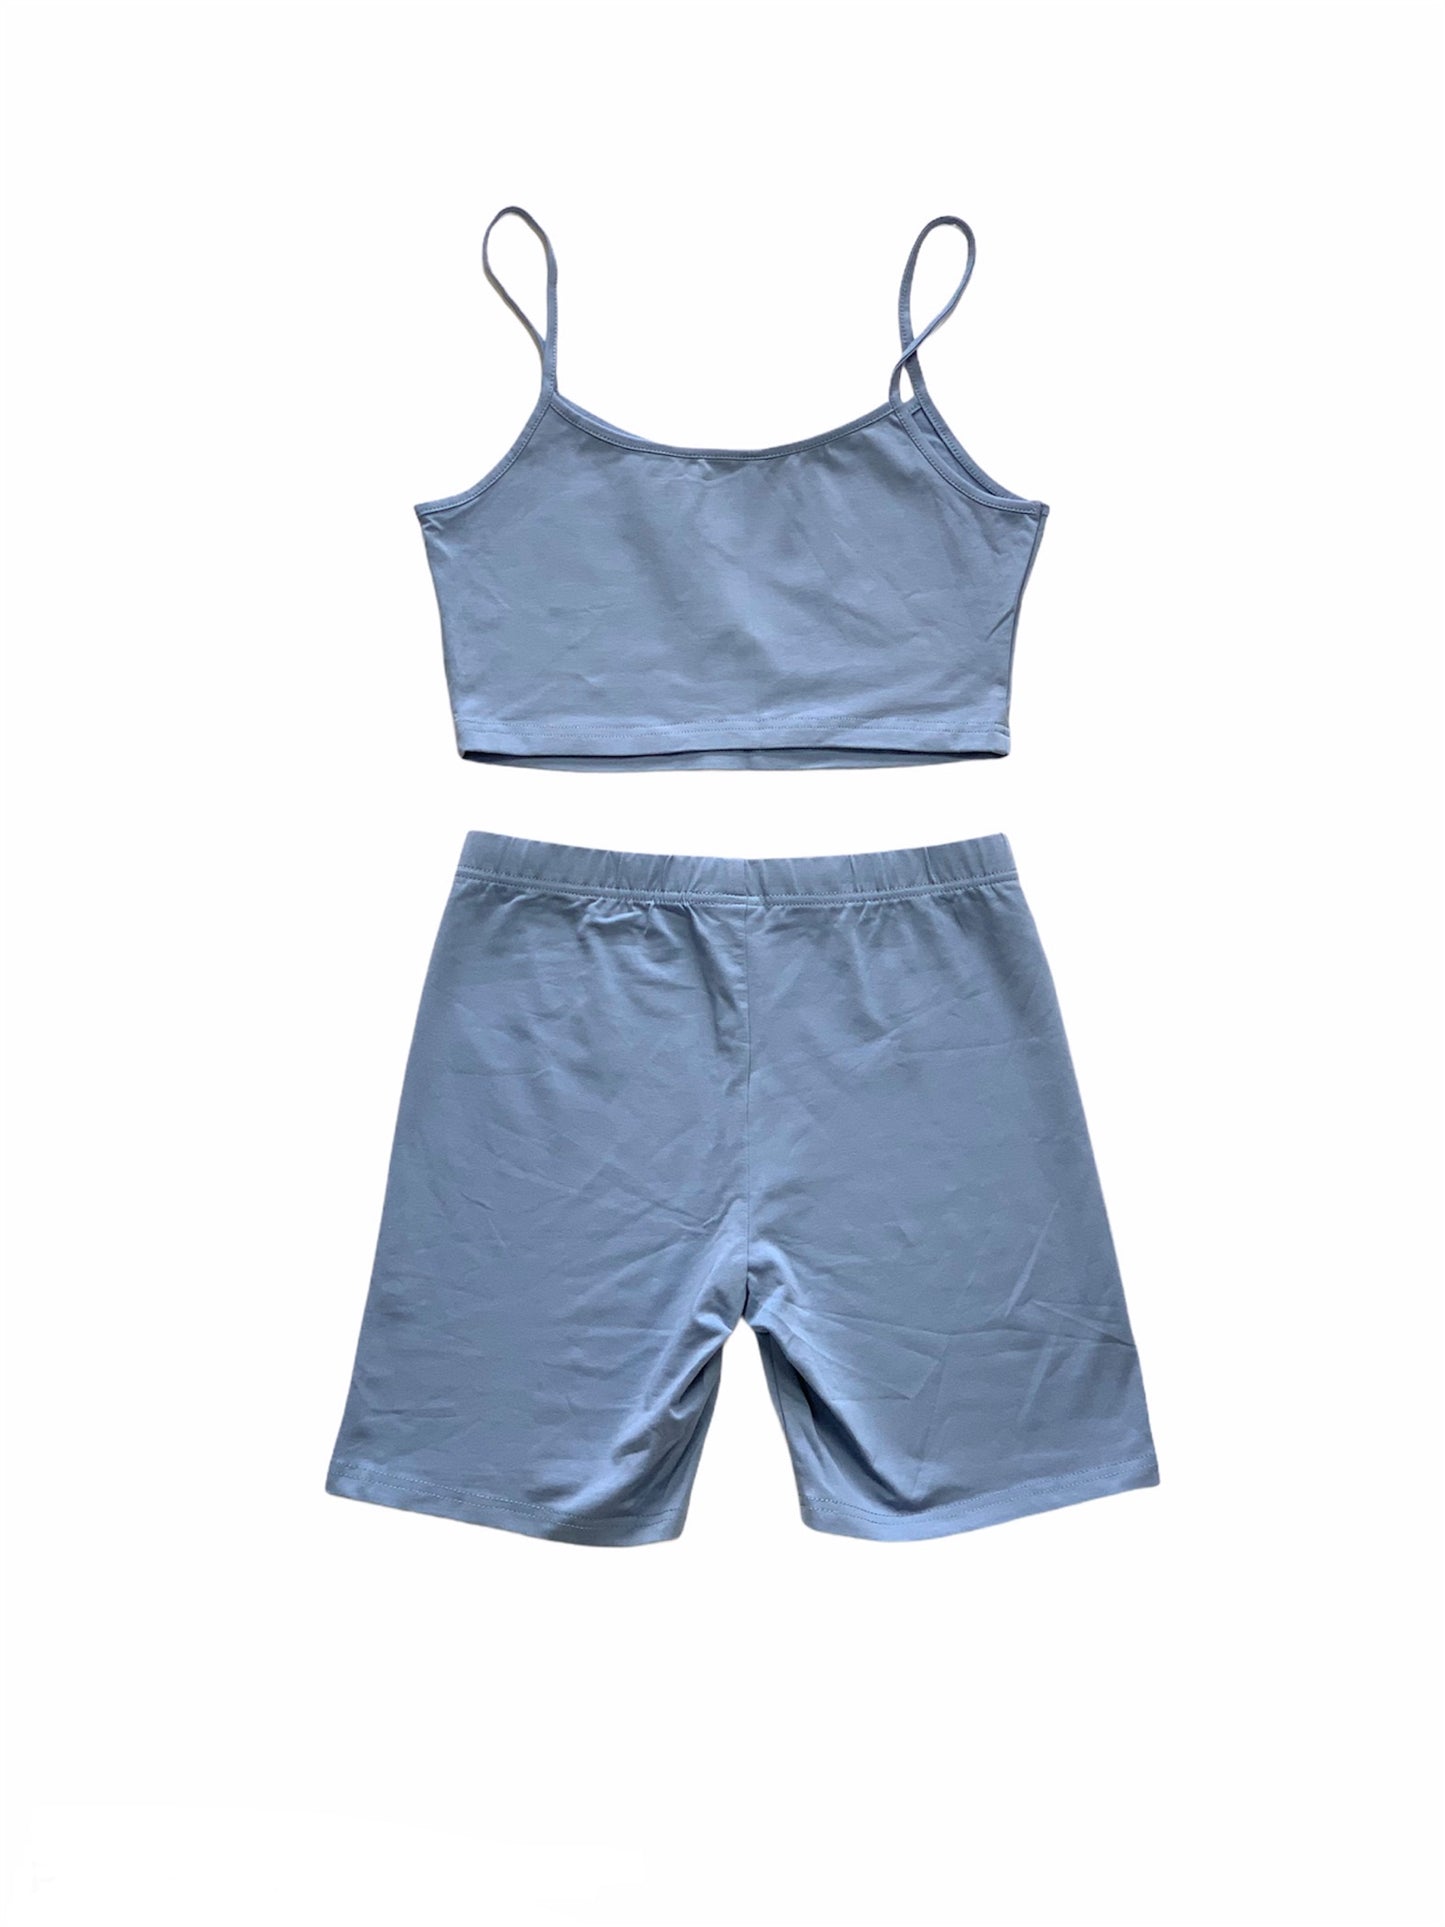 Kimberley Crop Top & Bike Shorts Matching Lounge Set - Tuesday Blue